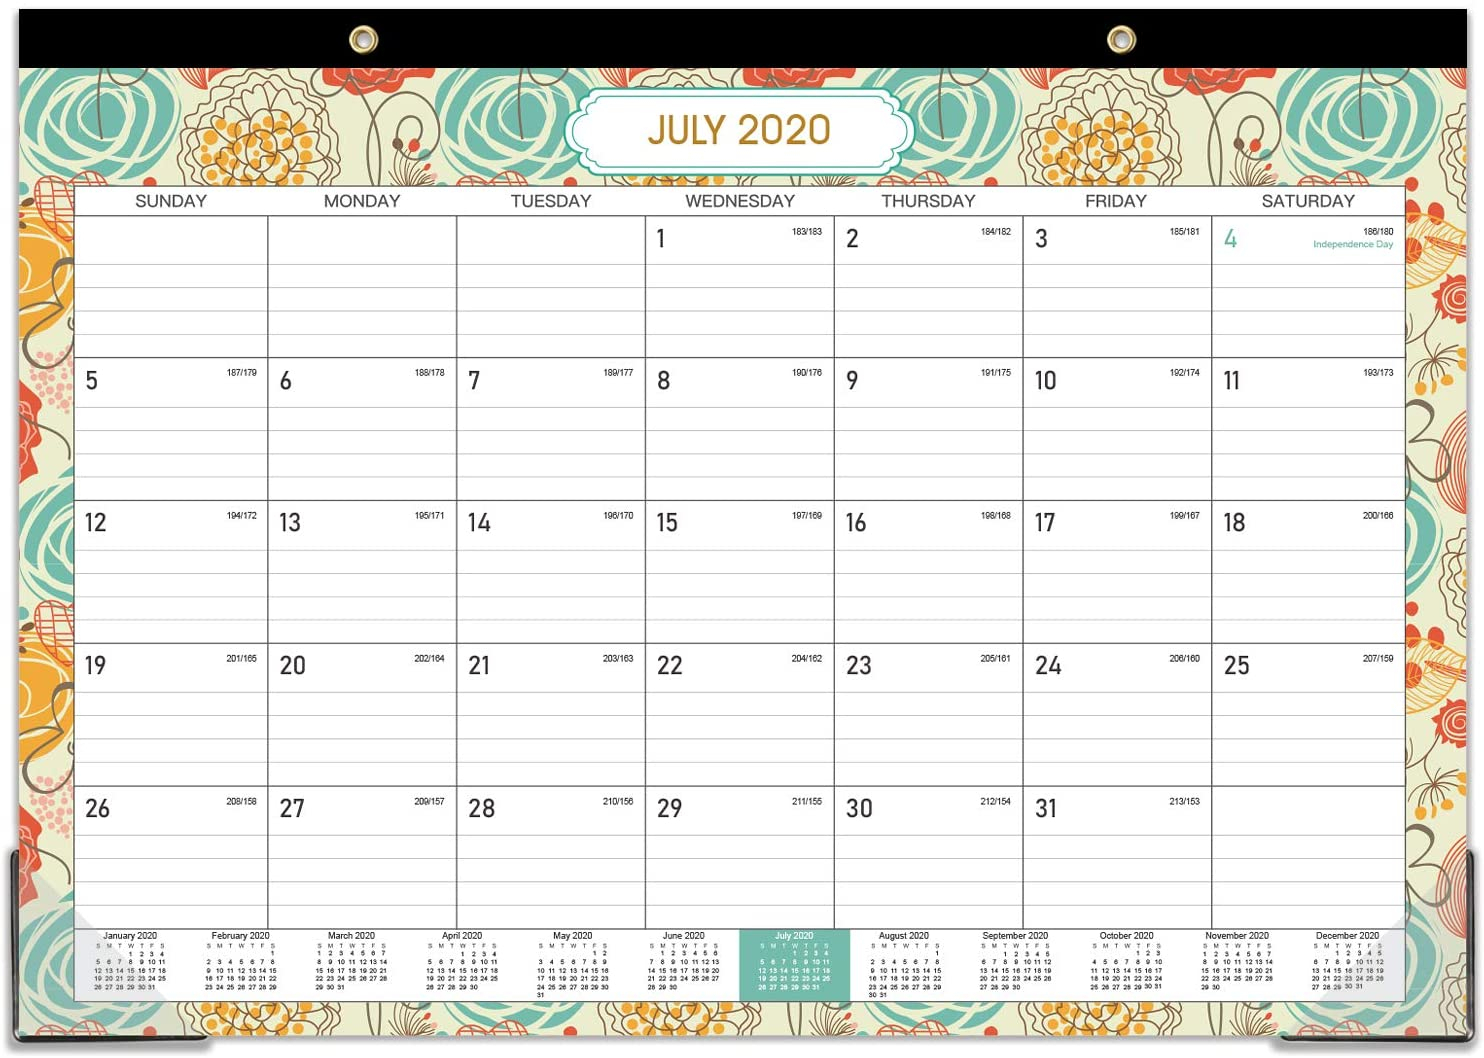 2022 Calendar: February 2020